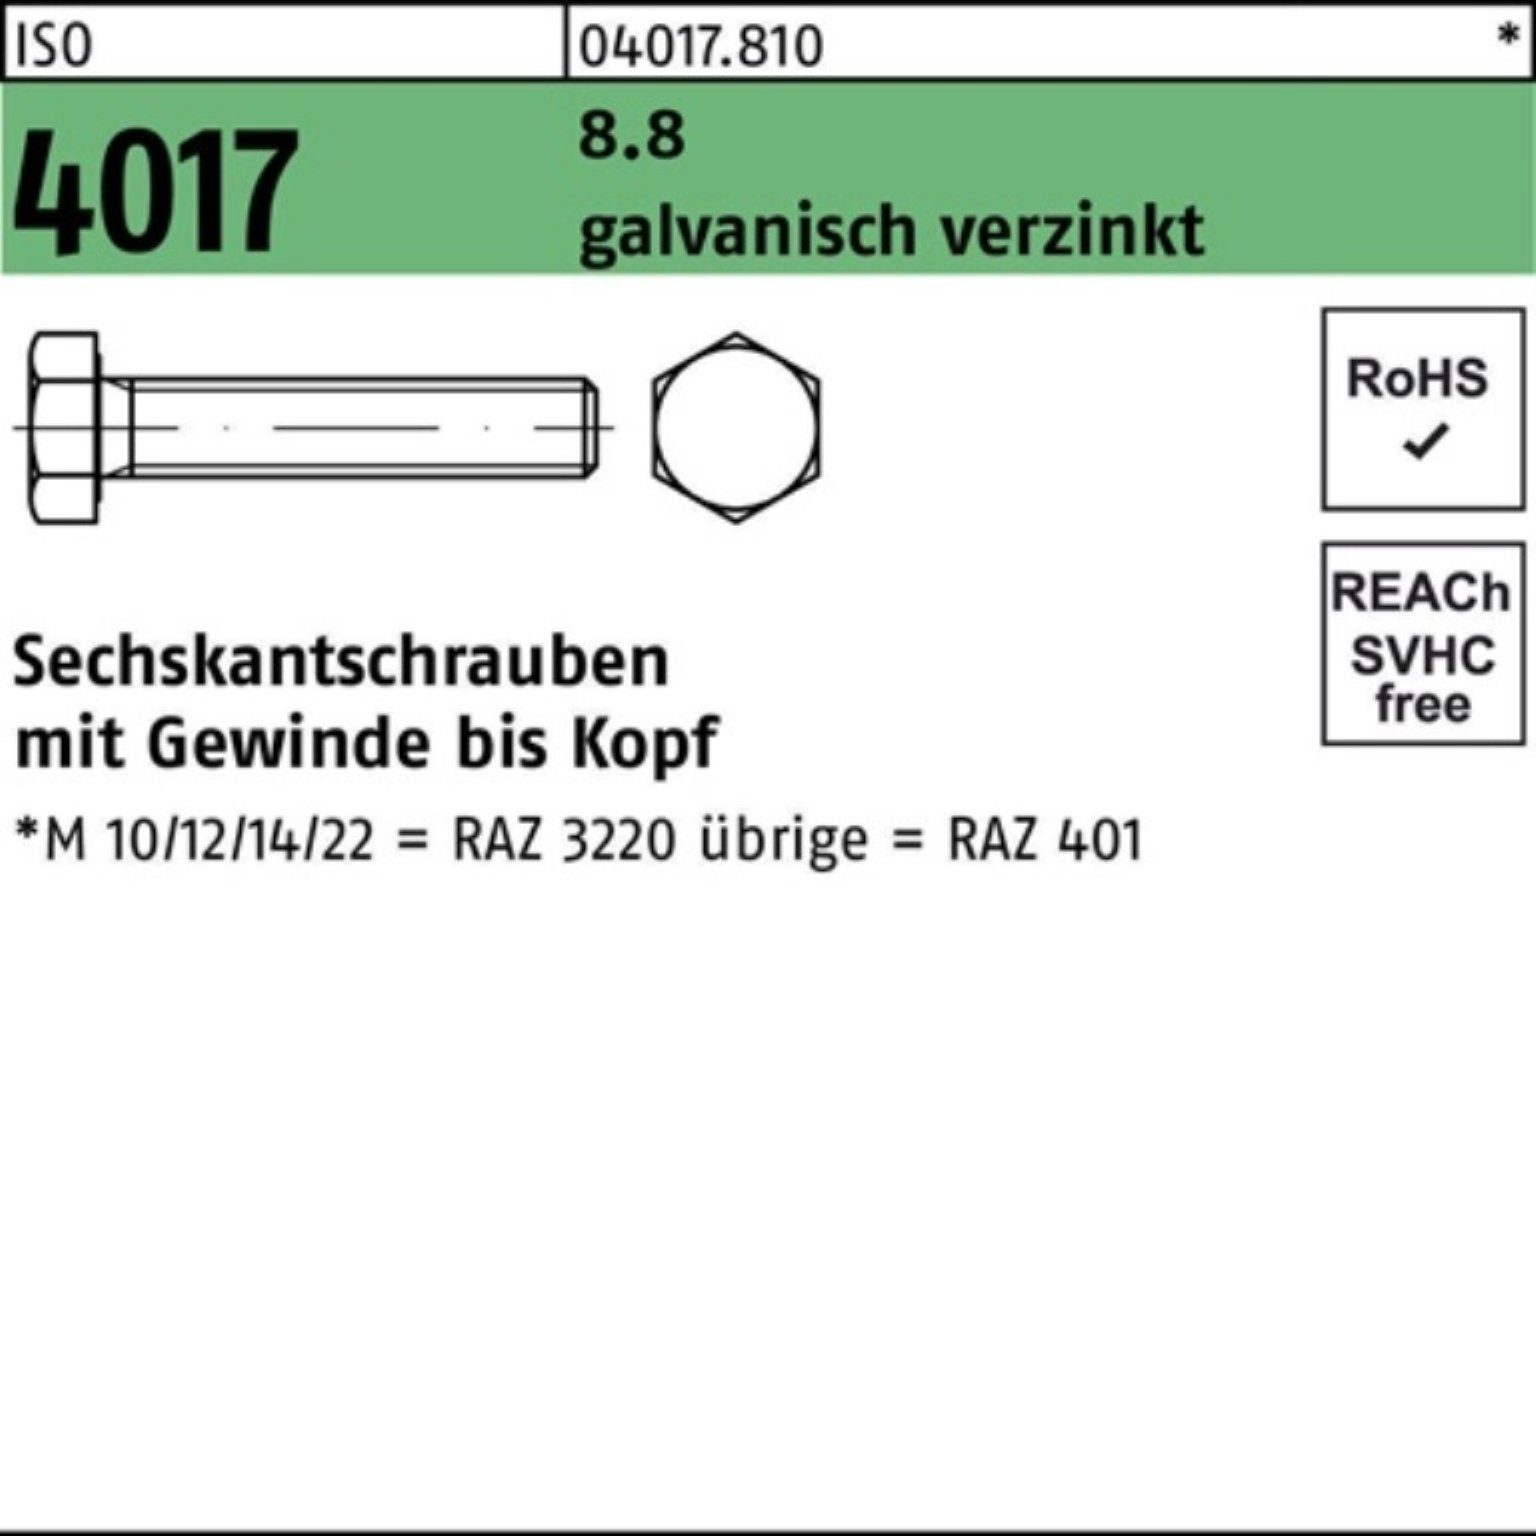 Bufab Sechskantschraube 100er Pack 4017 Sechskantschraube 50 8.8 VG ISO galv.verz. St M14x 100